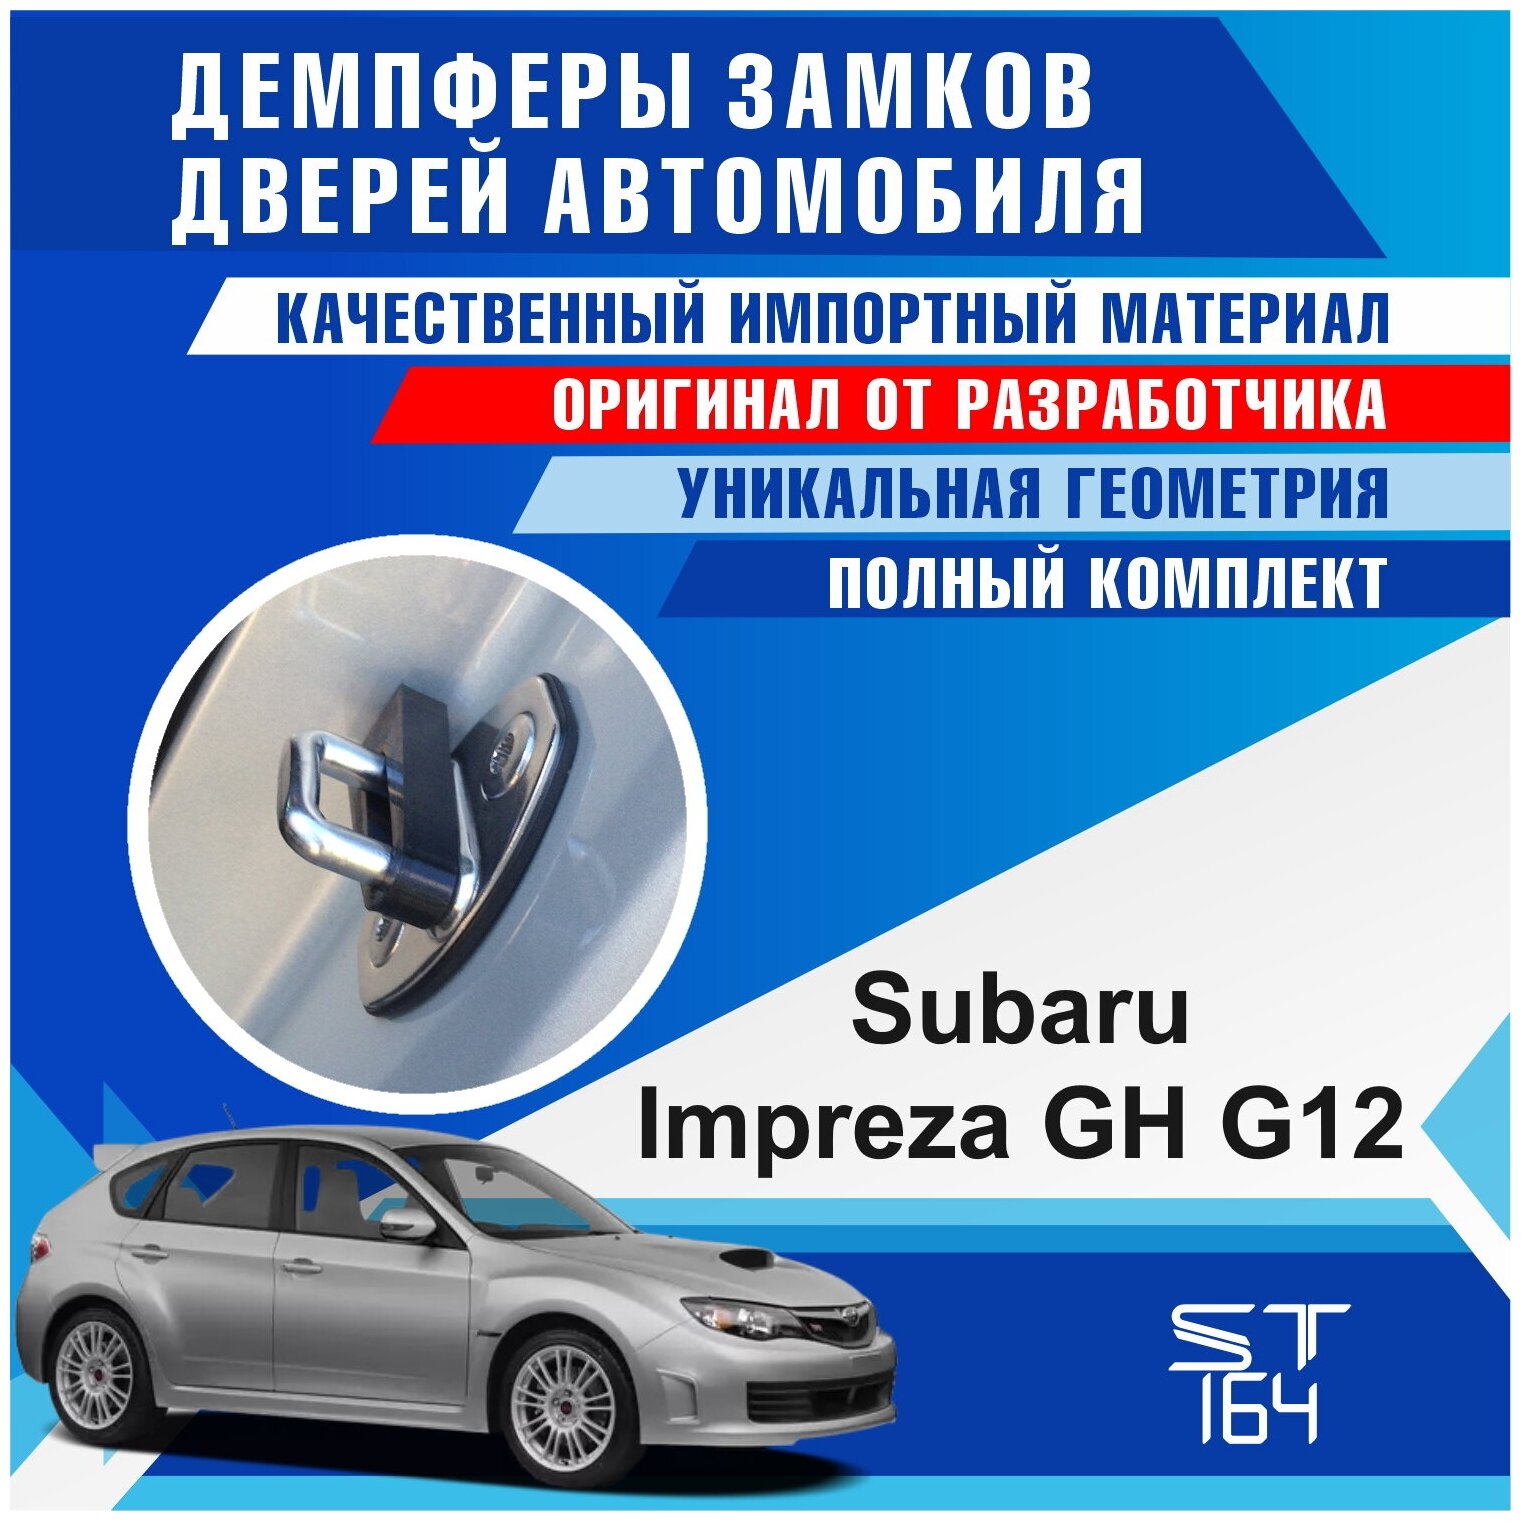 Демпферы замков дверей Субару Импреза GH G12 (XV) (Subaru Impreza GH G12 (XV)), на 4 двери + смазка